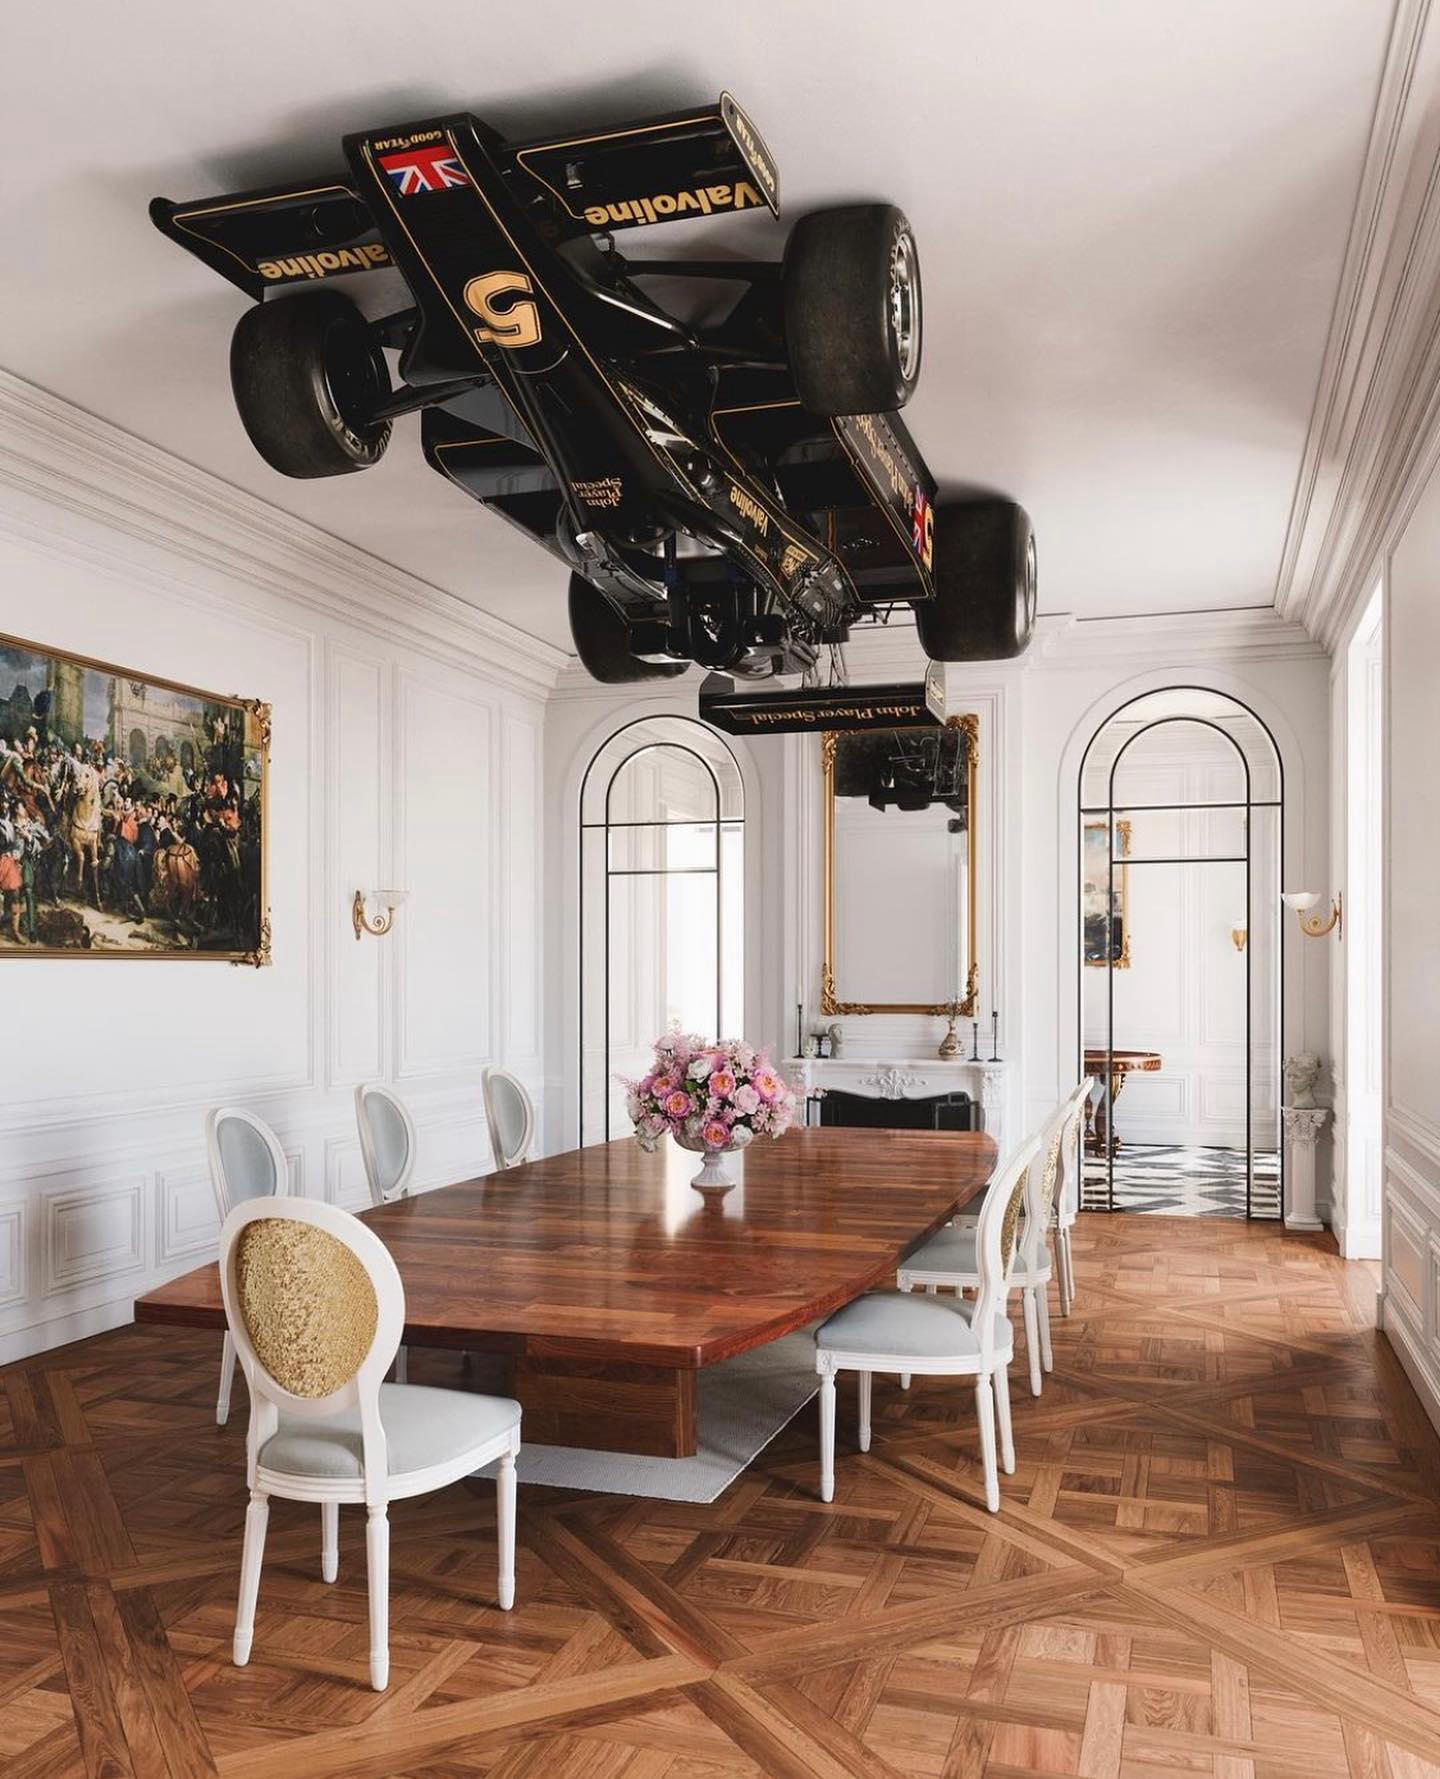 Design.Only - Lotus 78 in a Parisian Interior